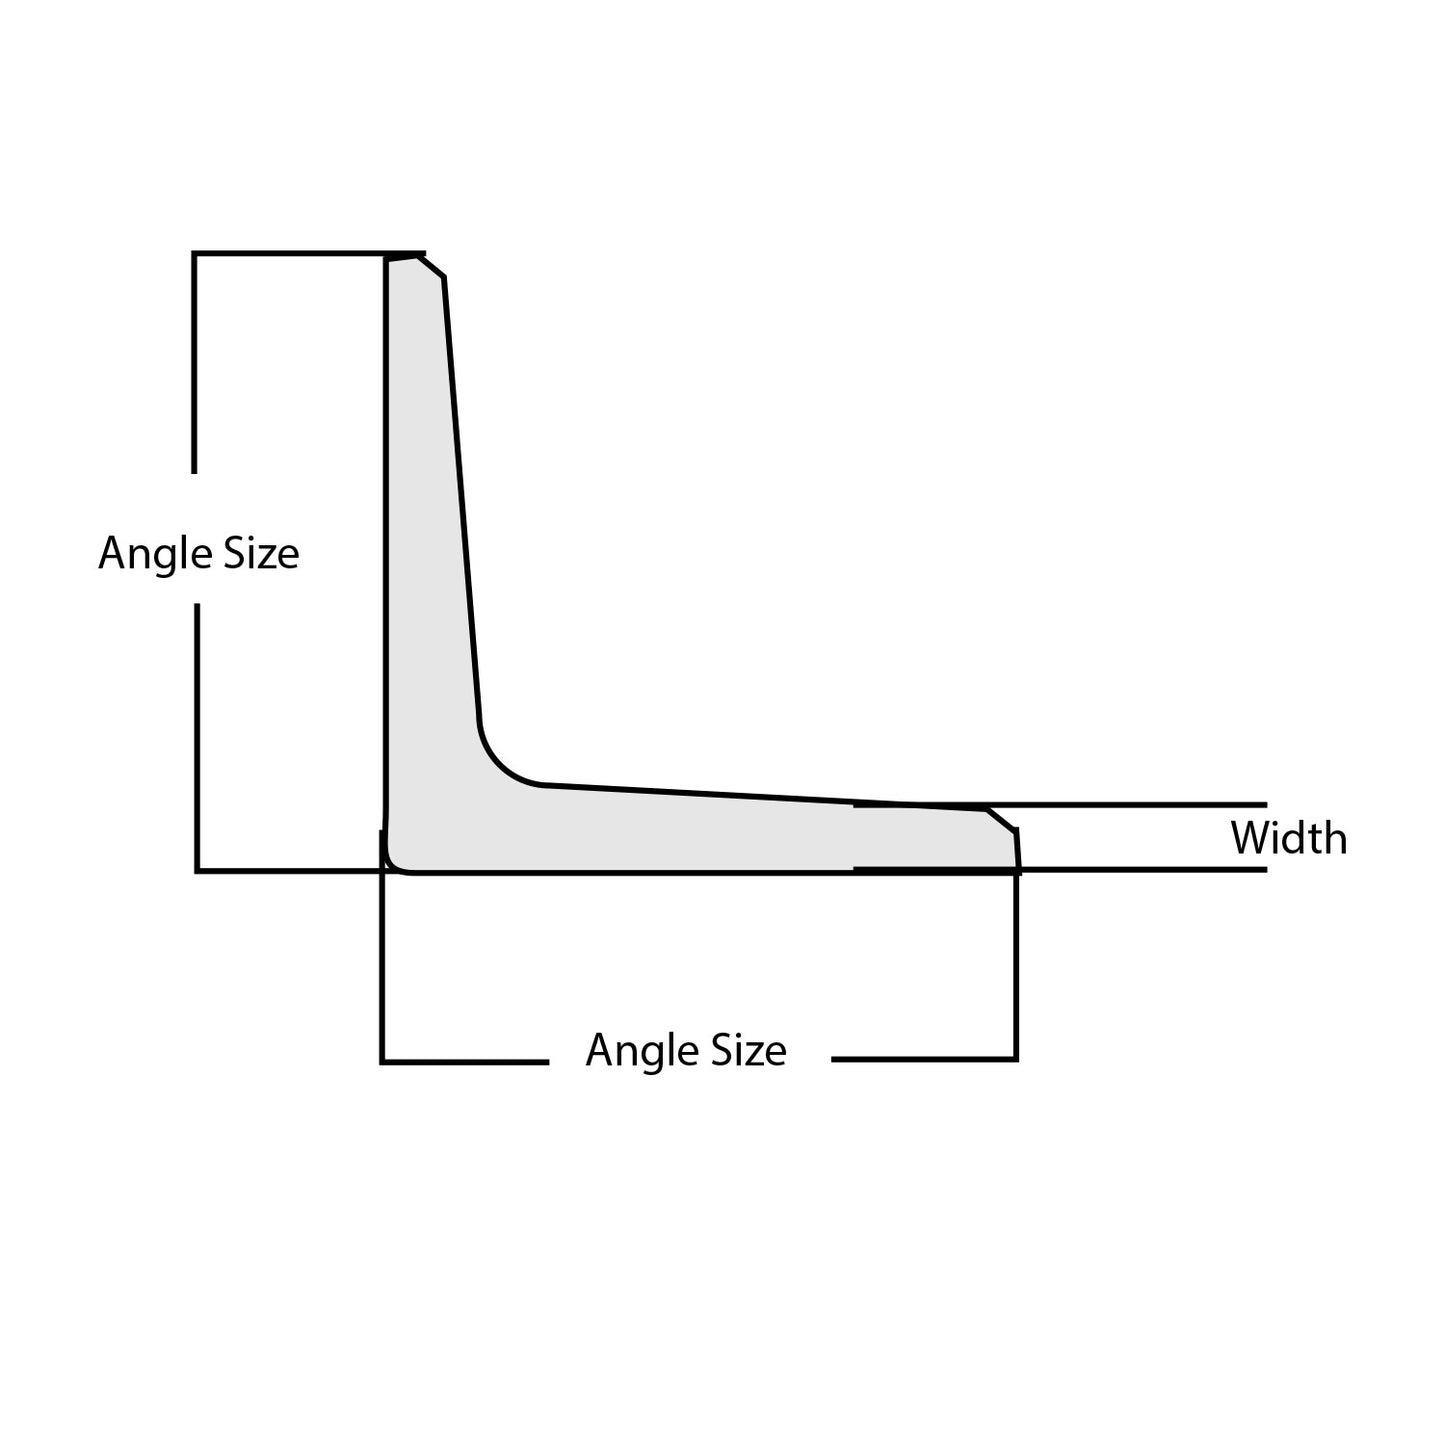 2" x 1" Aluminum Angle - Thickness 1/8